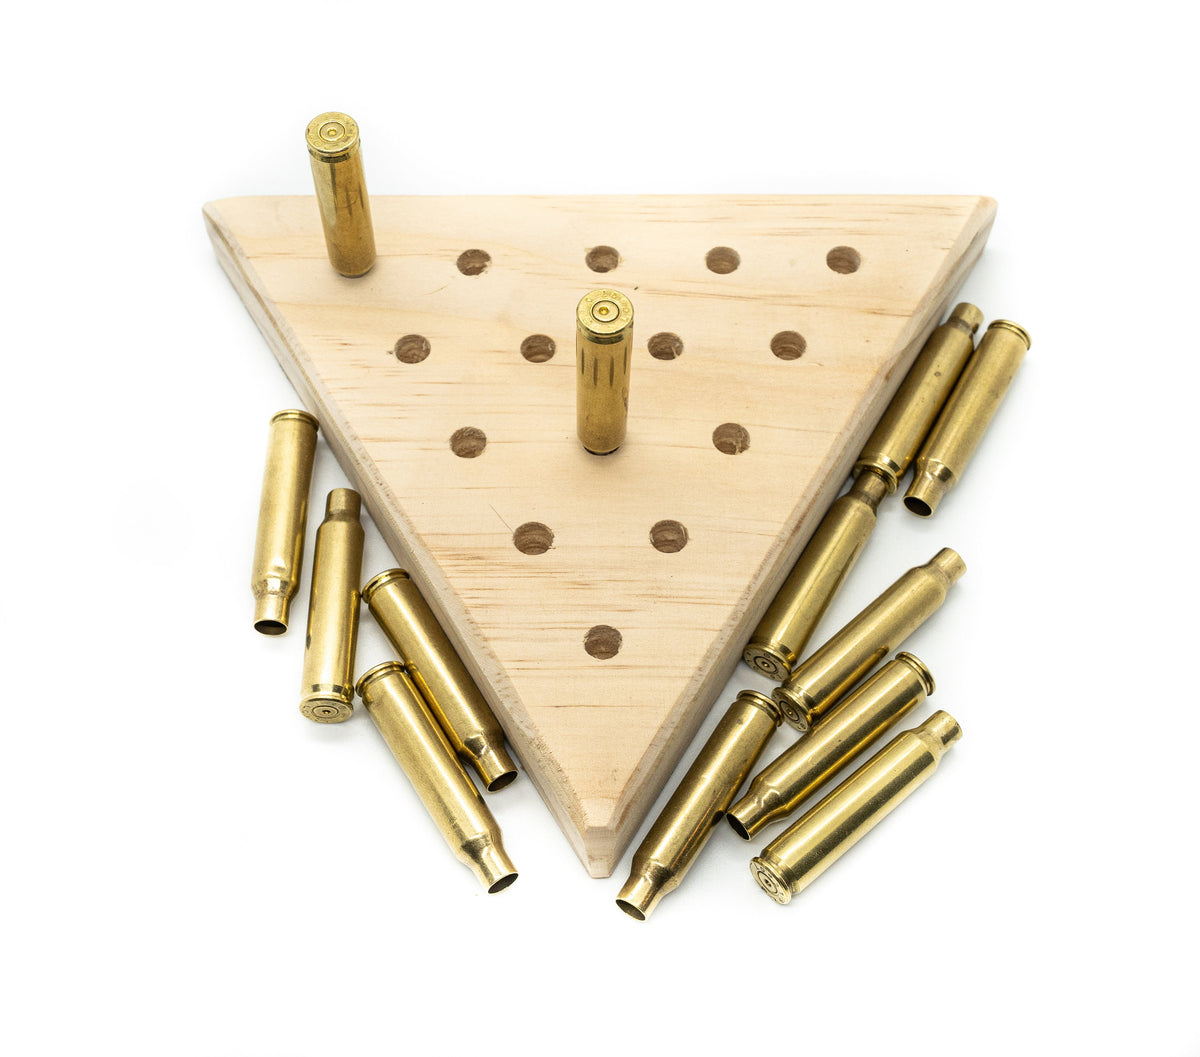 Tricky Triangle - Peg Solitaire - Bullet Peg Wooden Kids Game Puzzle - Cracker Barrel Board Game - Wood Jumping Peg Game - Deer Hunter Gift